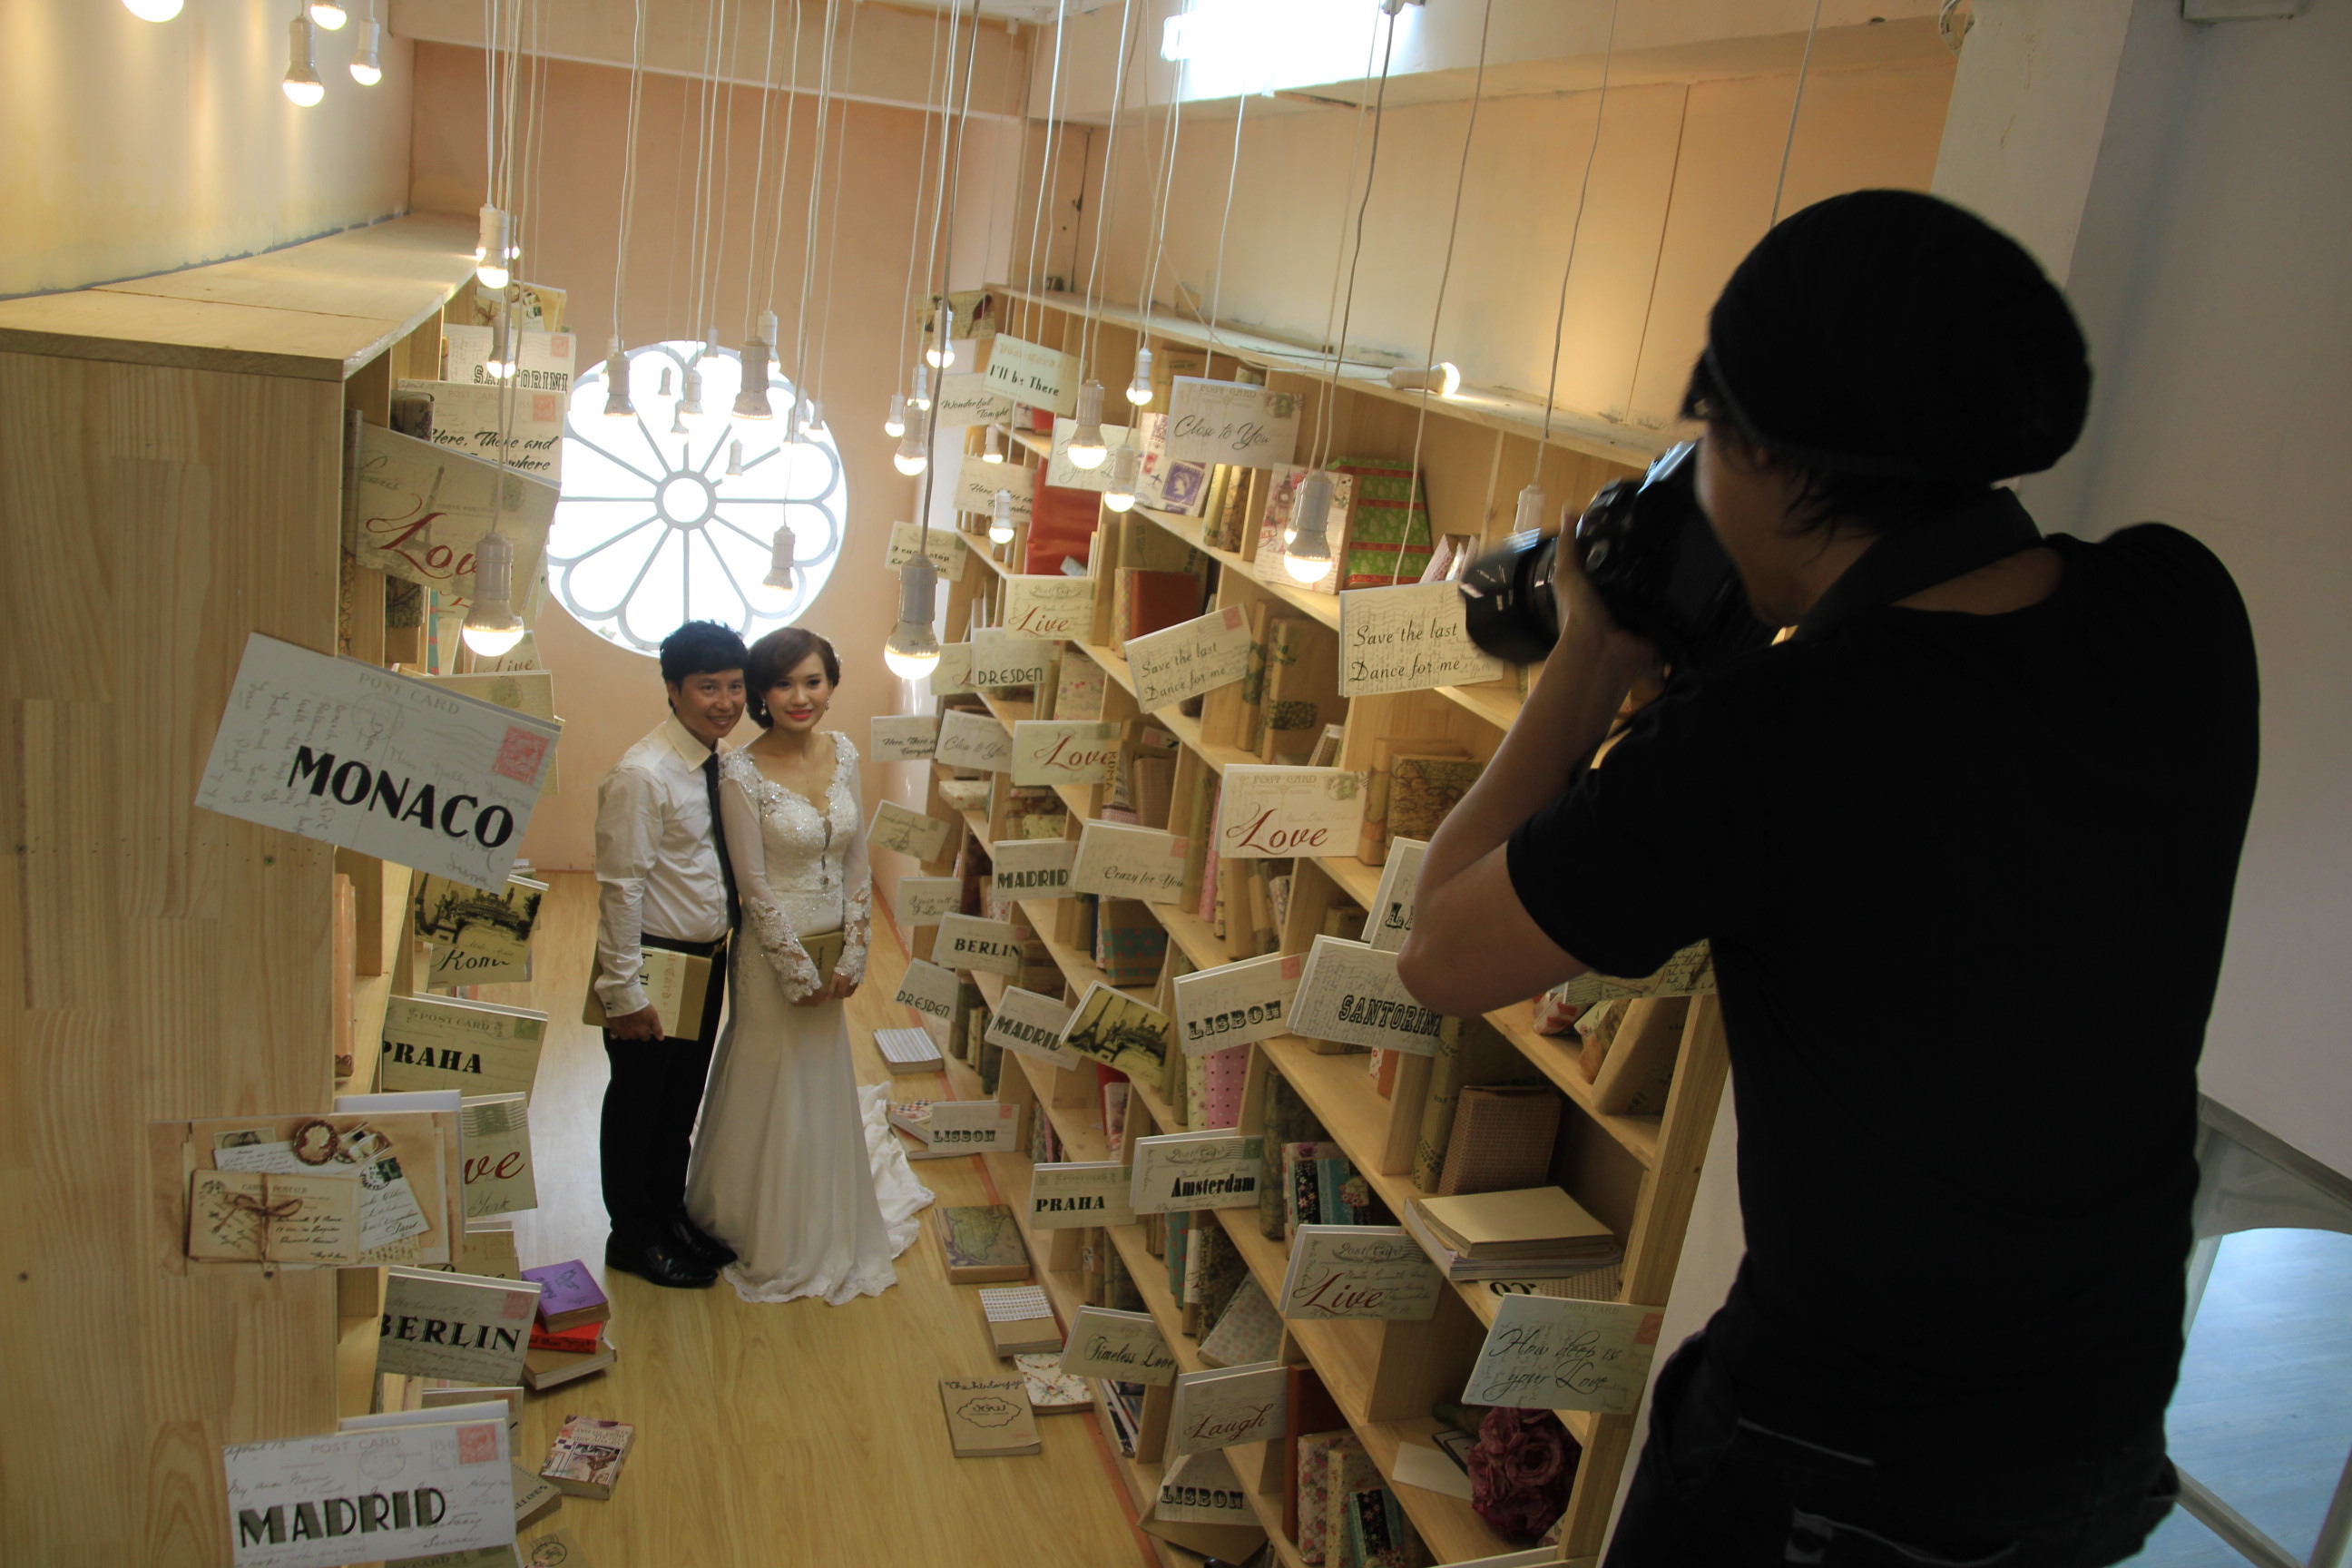 Vietnam couples say cheese for bridal photos at film studios